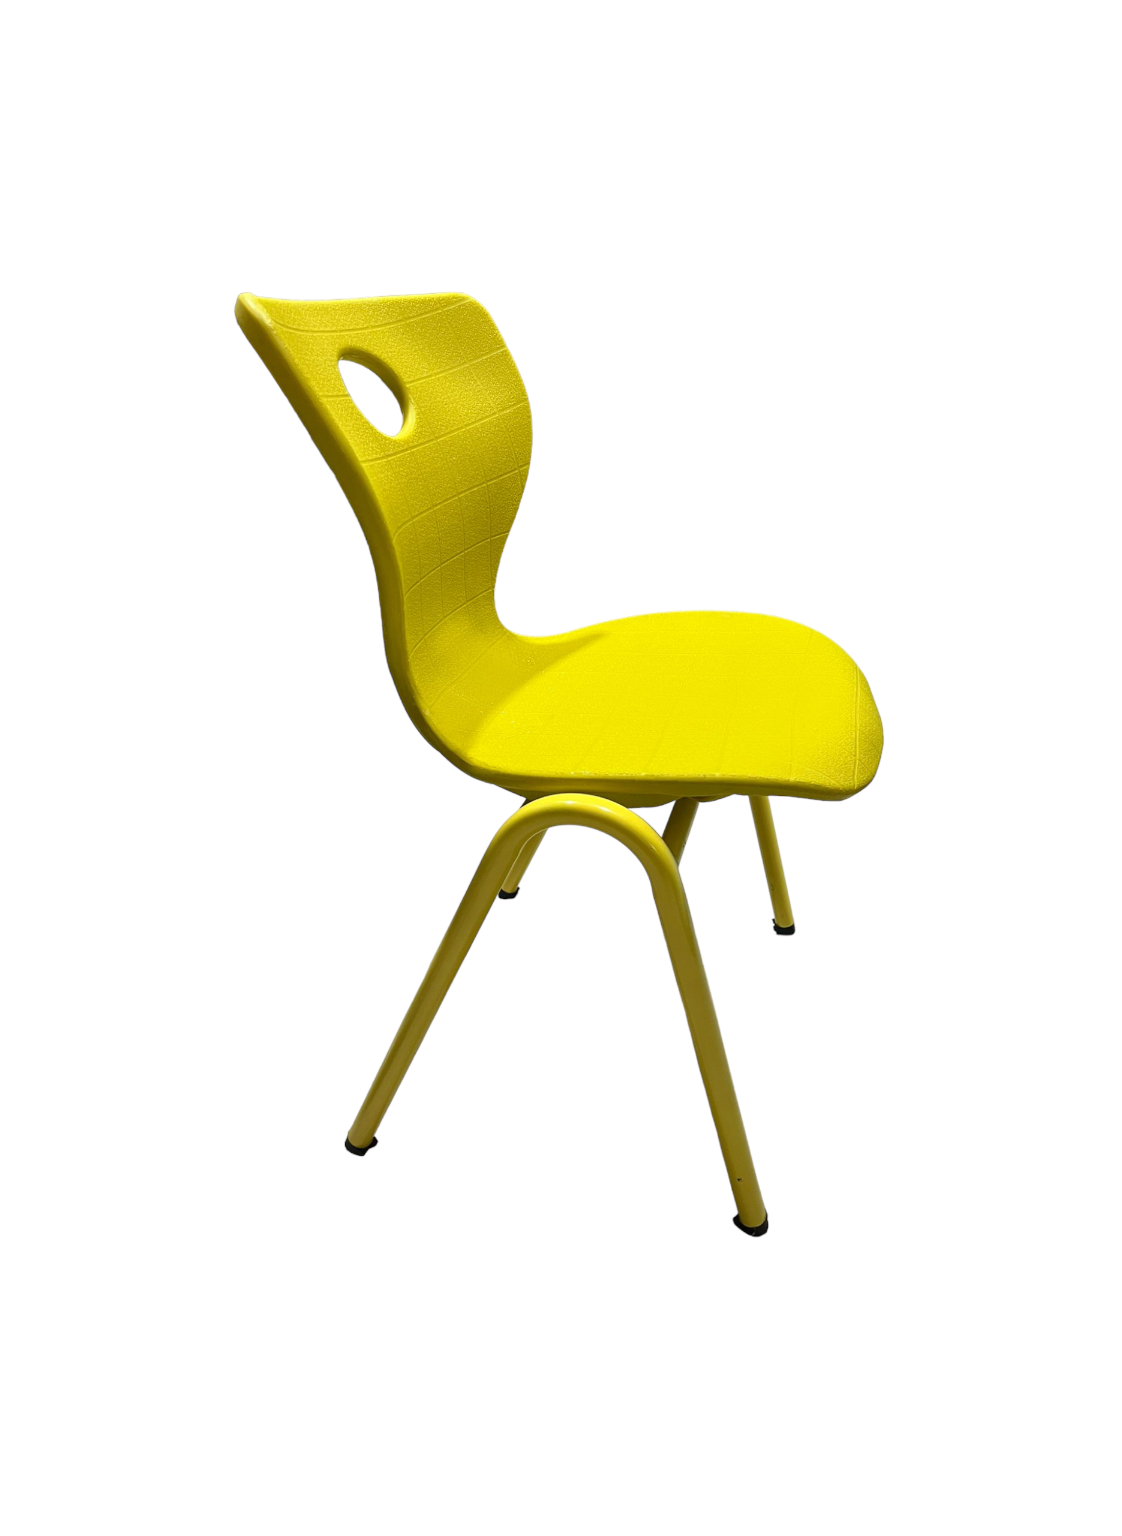 School Chairs Yellow